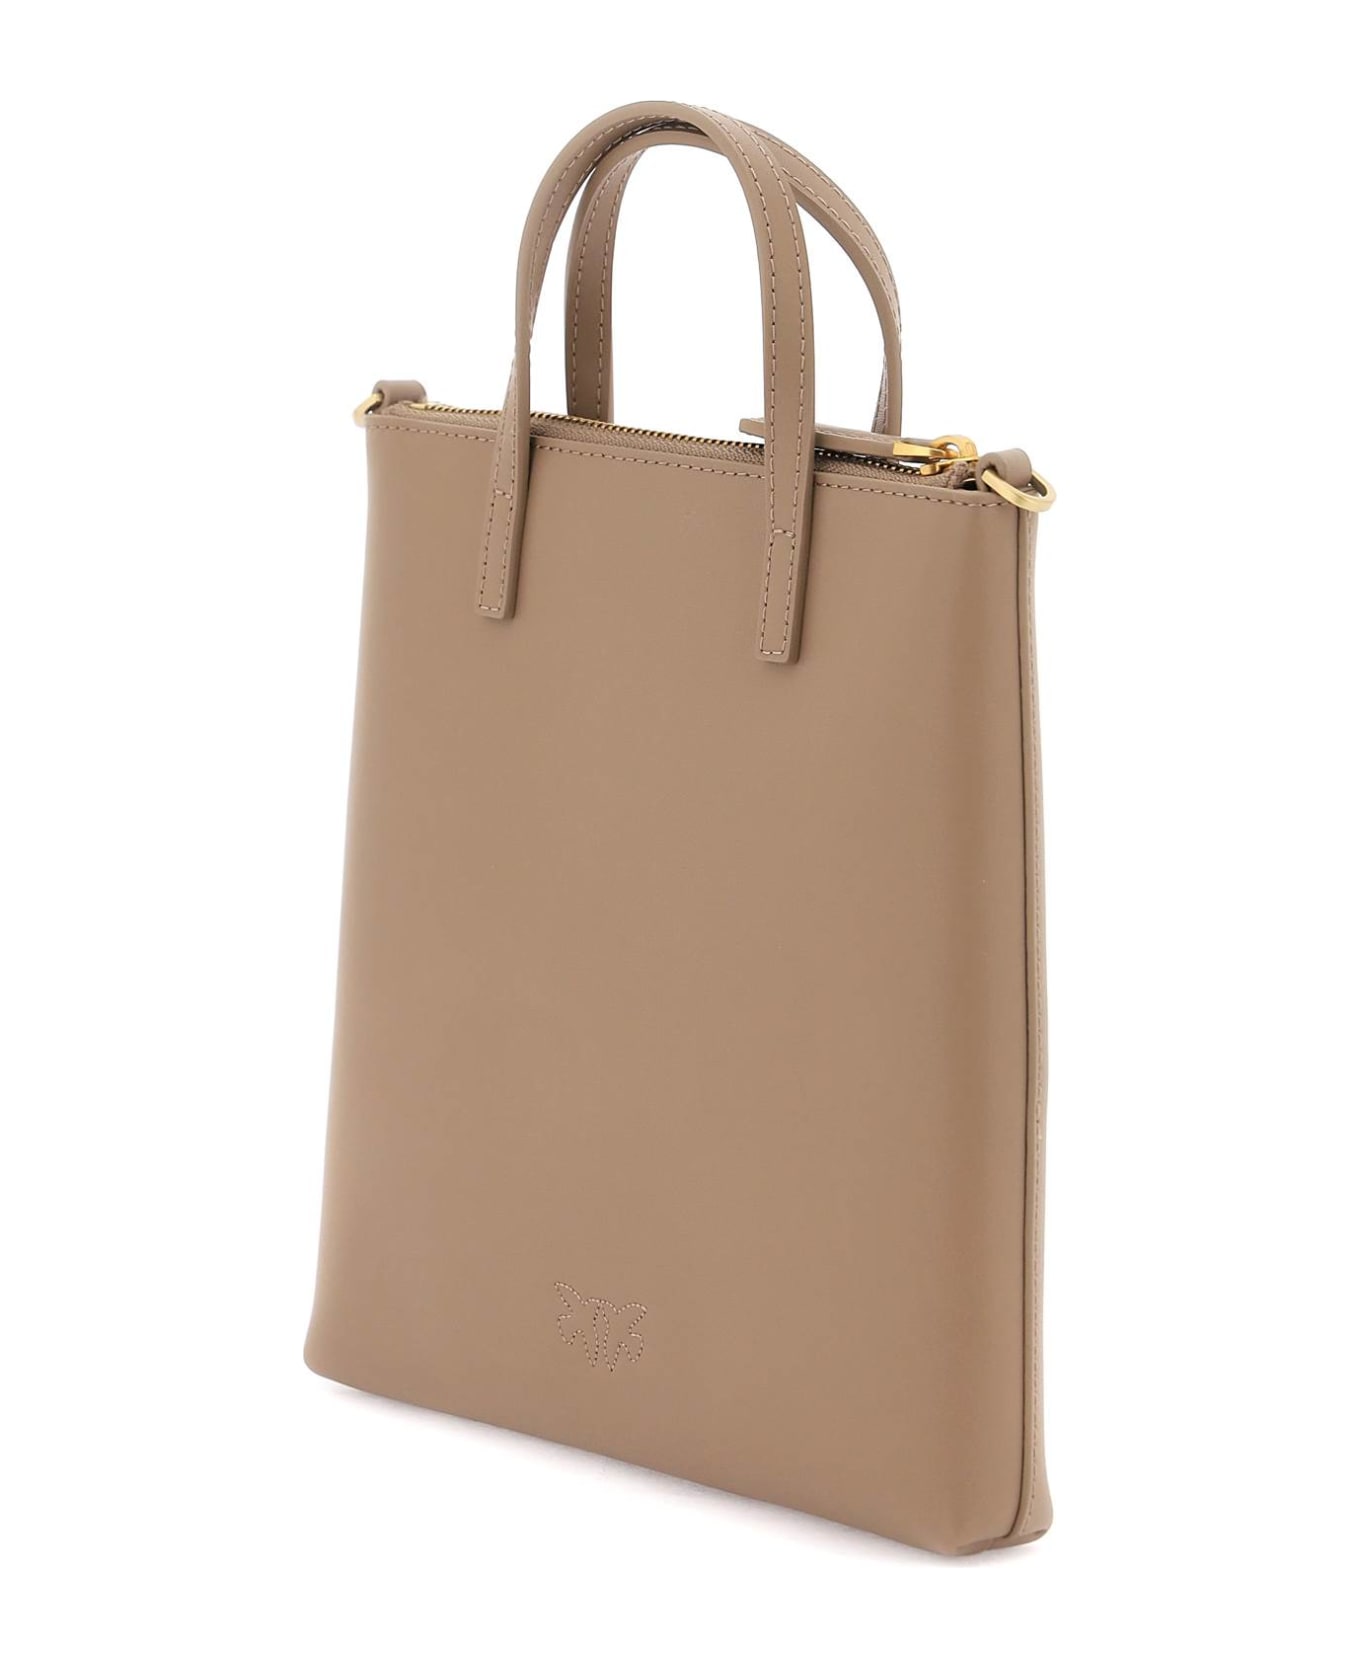 Pinko Leather Mini Tote Bag - BISCOTTO ZENZERO ANTIQUE GOLD (Brown) トートバッグ